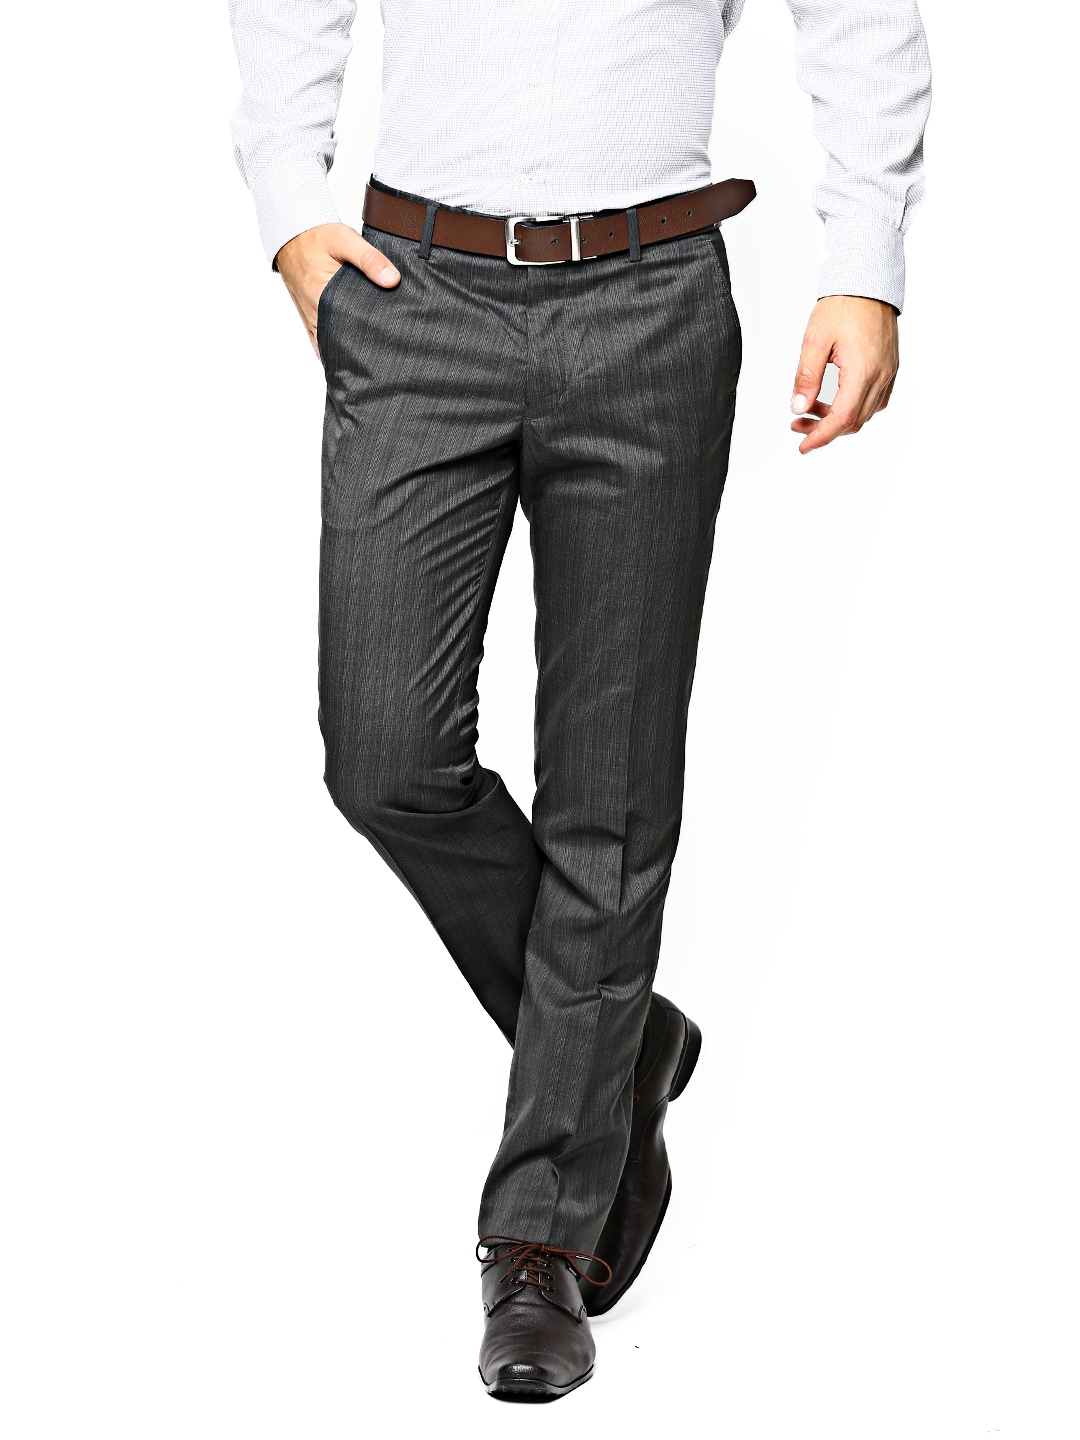 Mancrew Slim Fit Formal Pant for men  Formal Trousers  Light Grey Black  Combo Pack Of 2